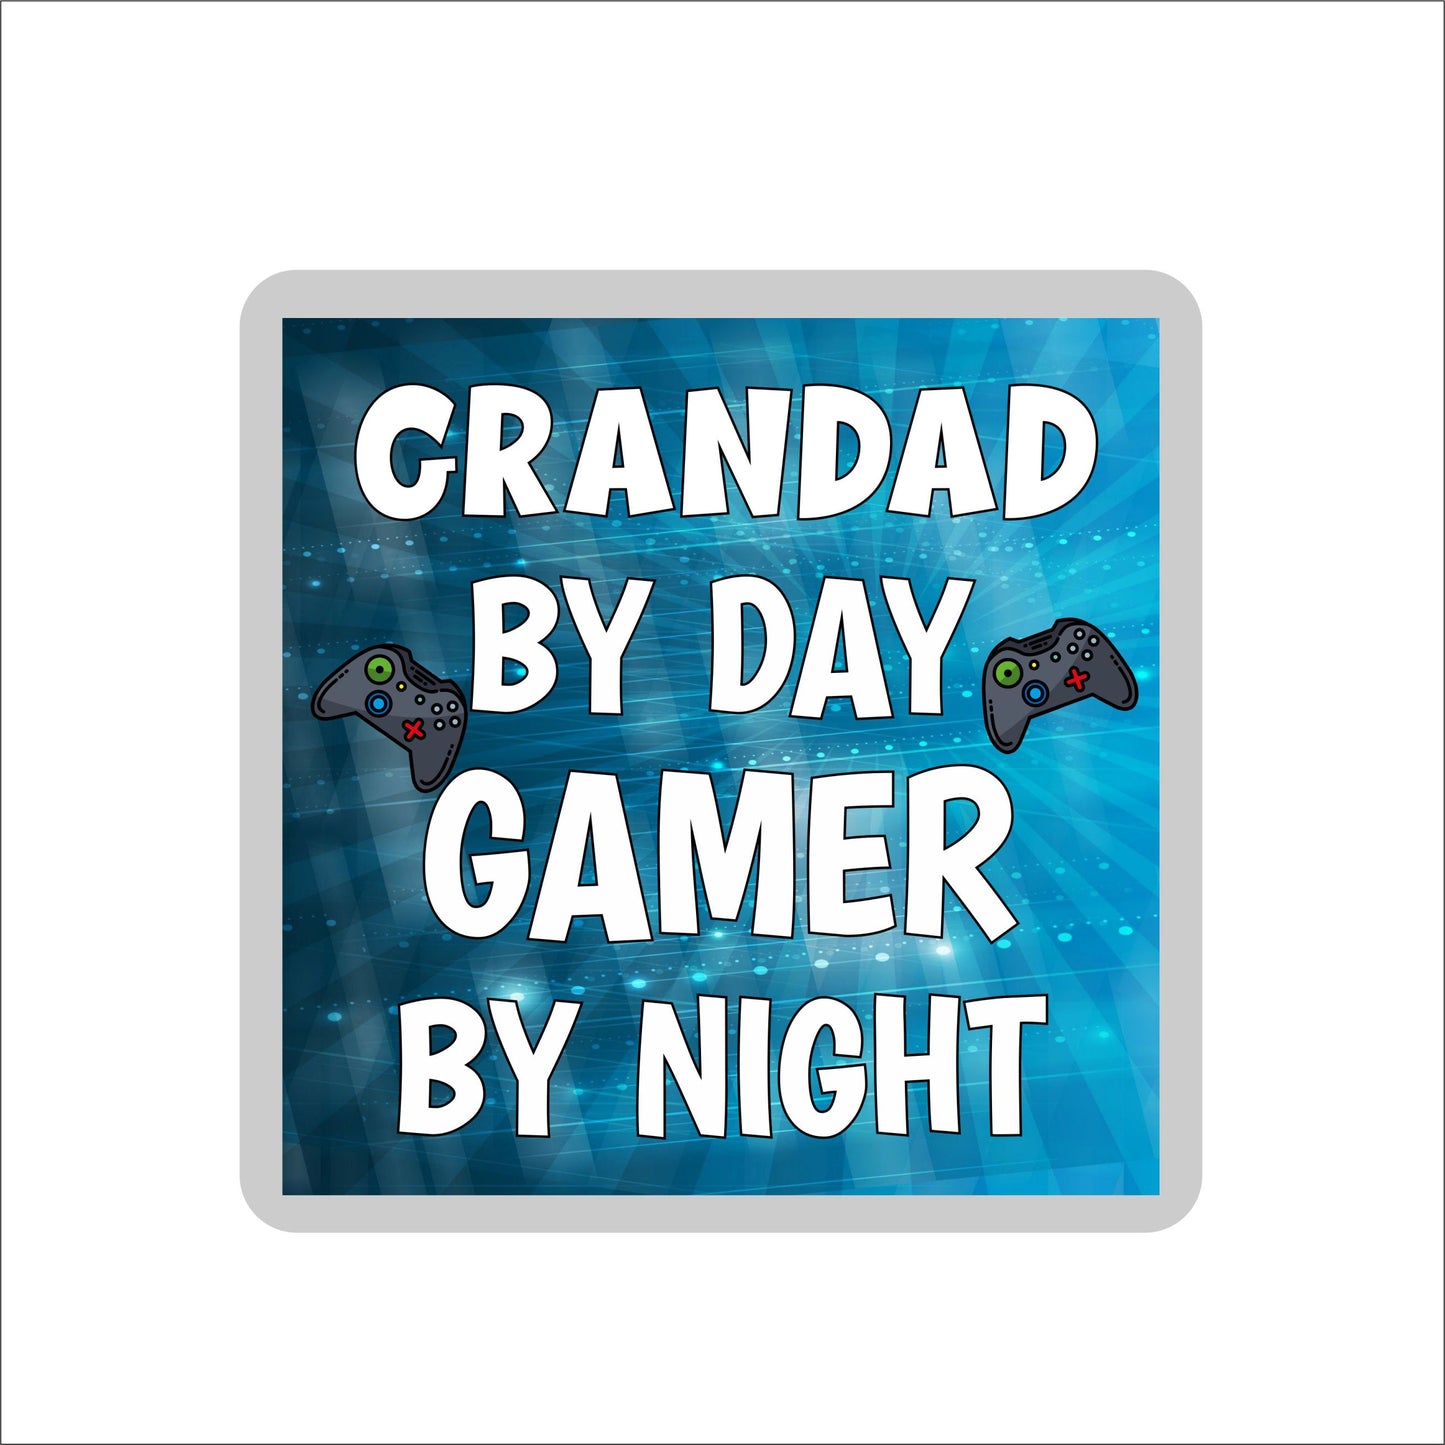 Grandad Gaming XBOX Coaster Gift - Grandad By Day Gamer By Night - Cute Fun Cheeky Novelty Present